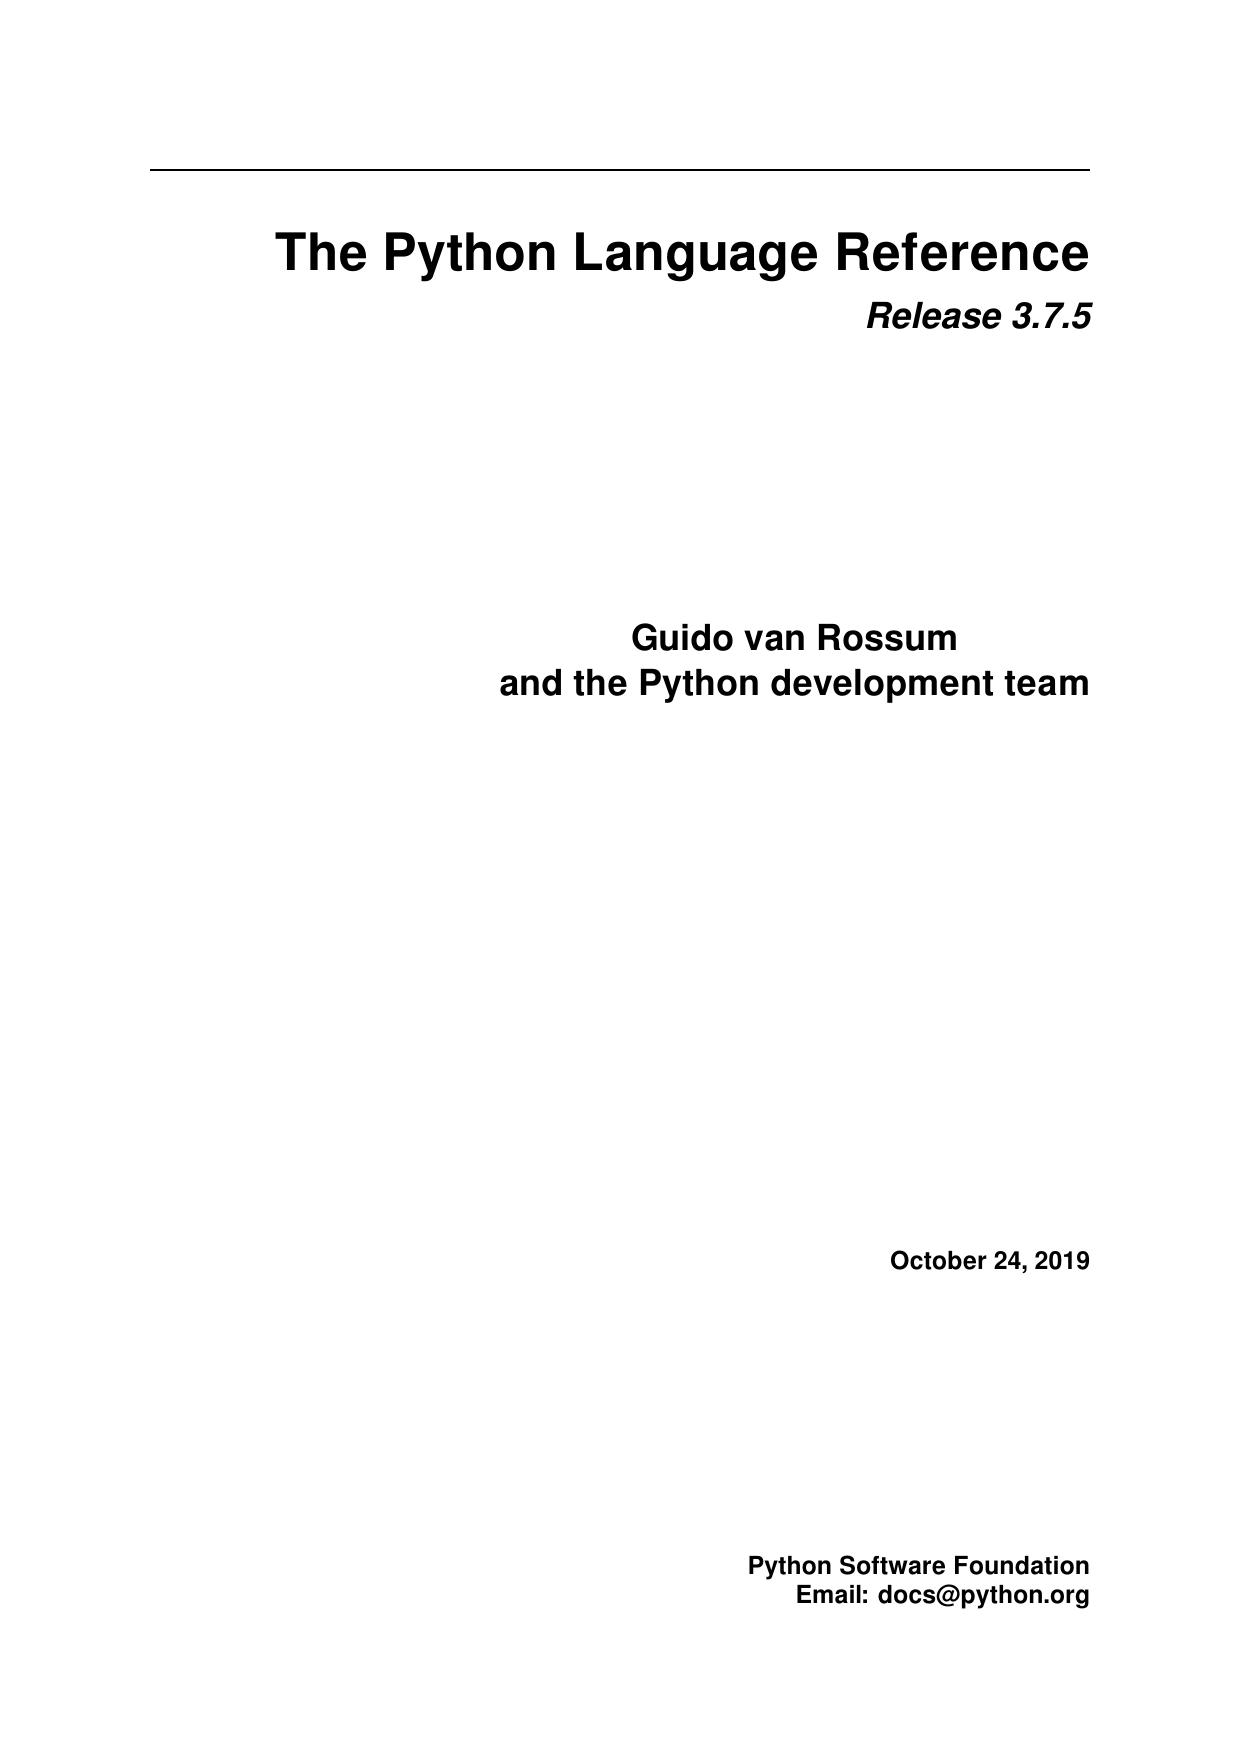 The Python Language Reference by Guido van Rossum & the Python development team